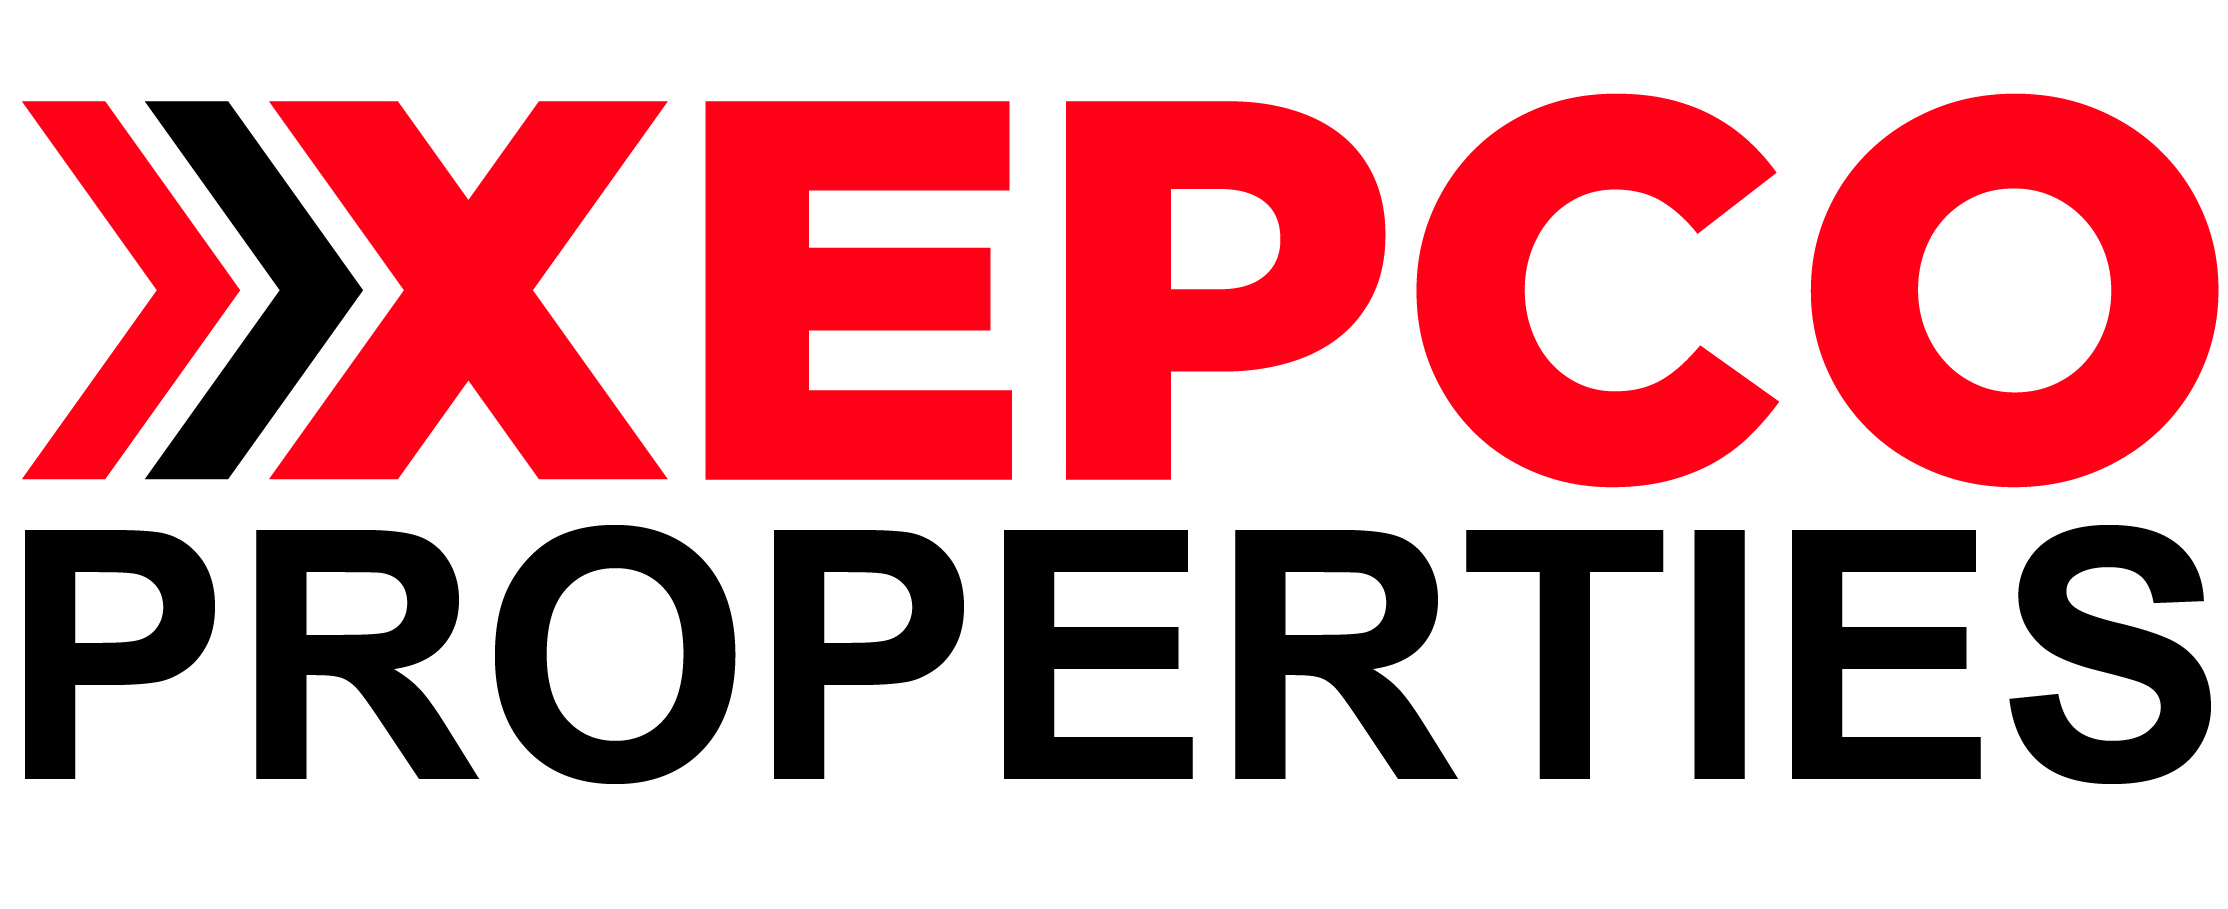 Xepco Management Property Management logo